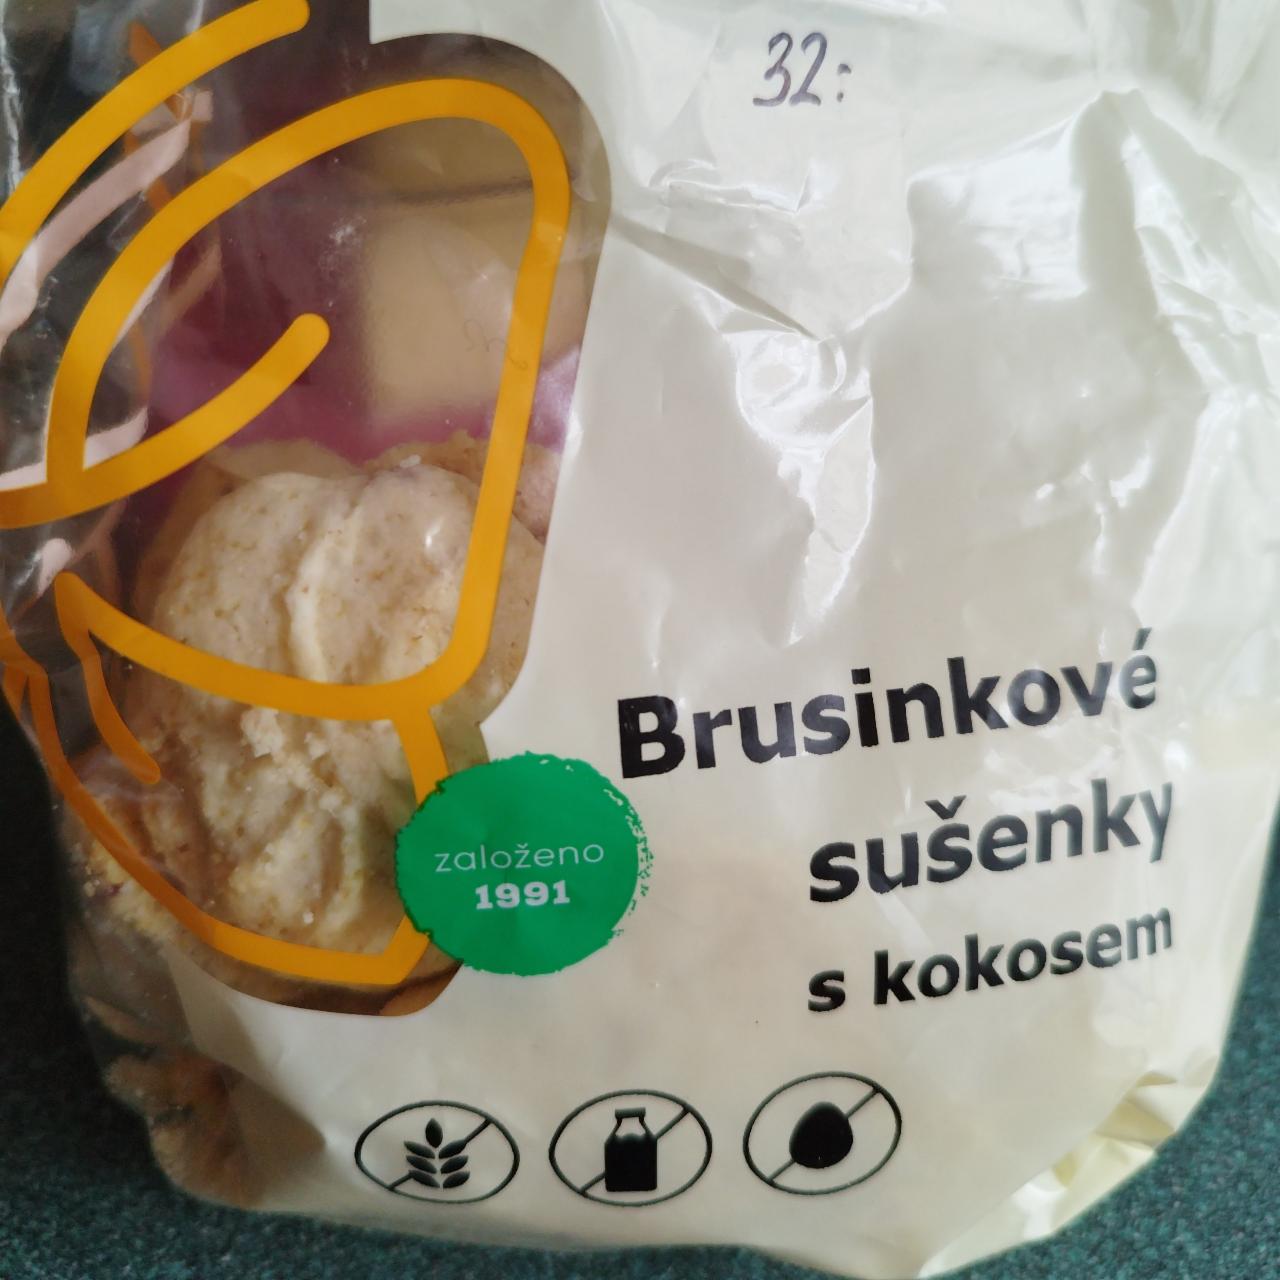 Fotografie - Brusinkové sušenky s kokosem Natural Jihlava